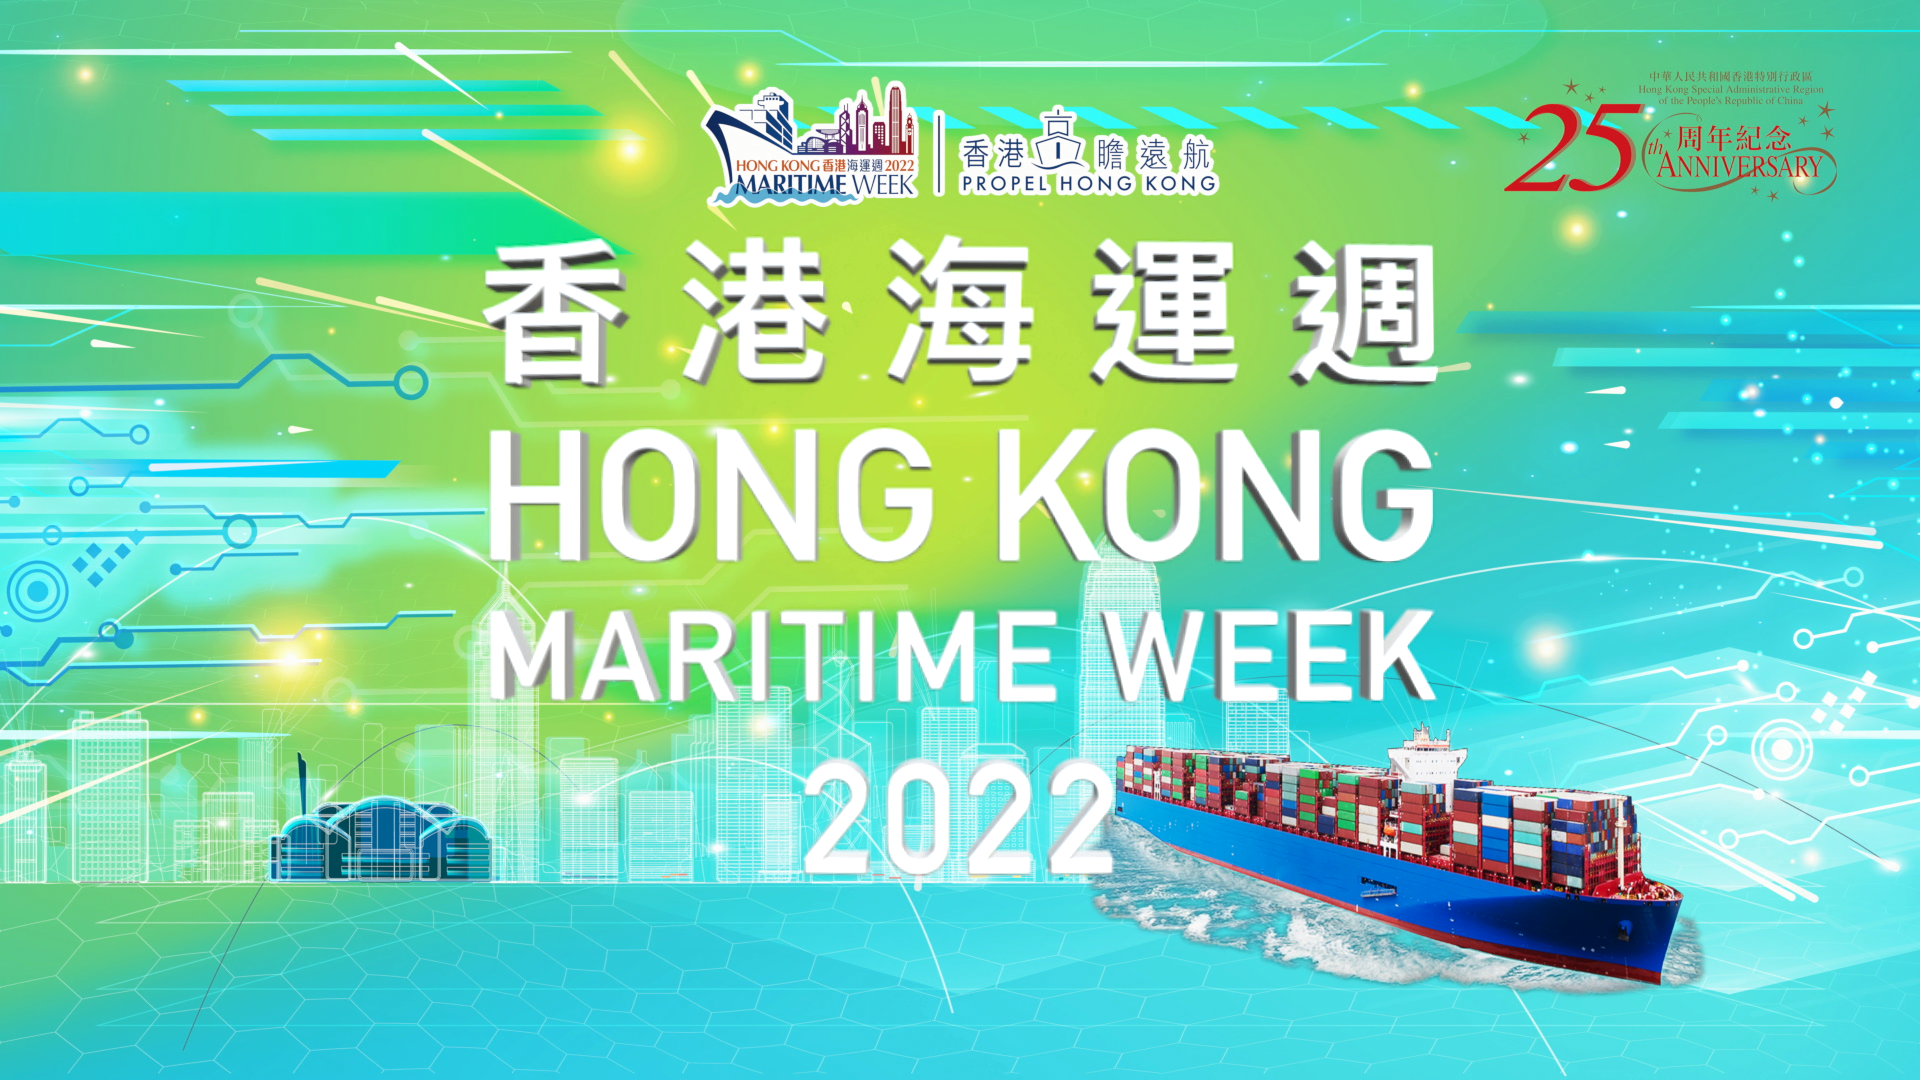 Hong Kong Maritime Week 2022 - Activity Review (Video Only)